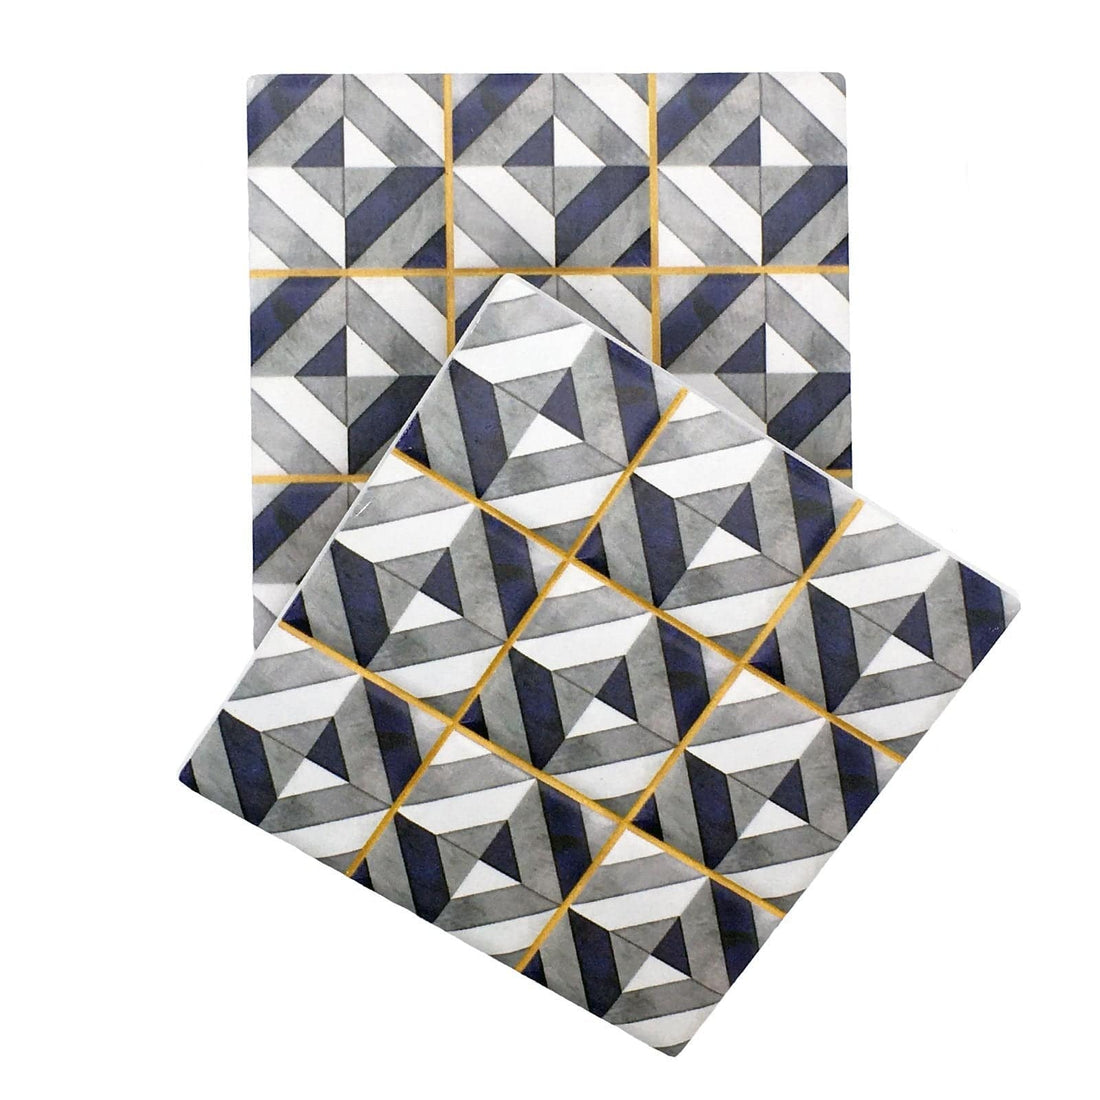 Design 12 Moroccan Tile Coasters - Set of 4.